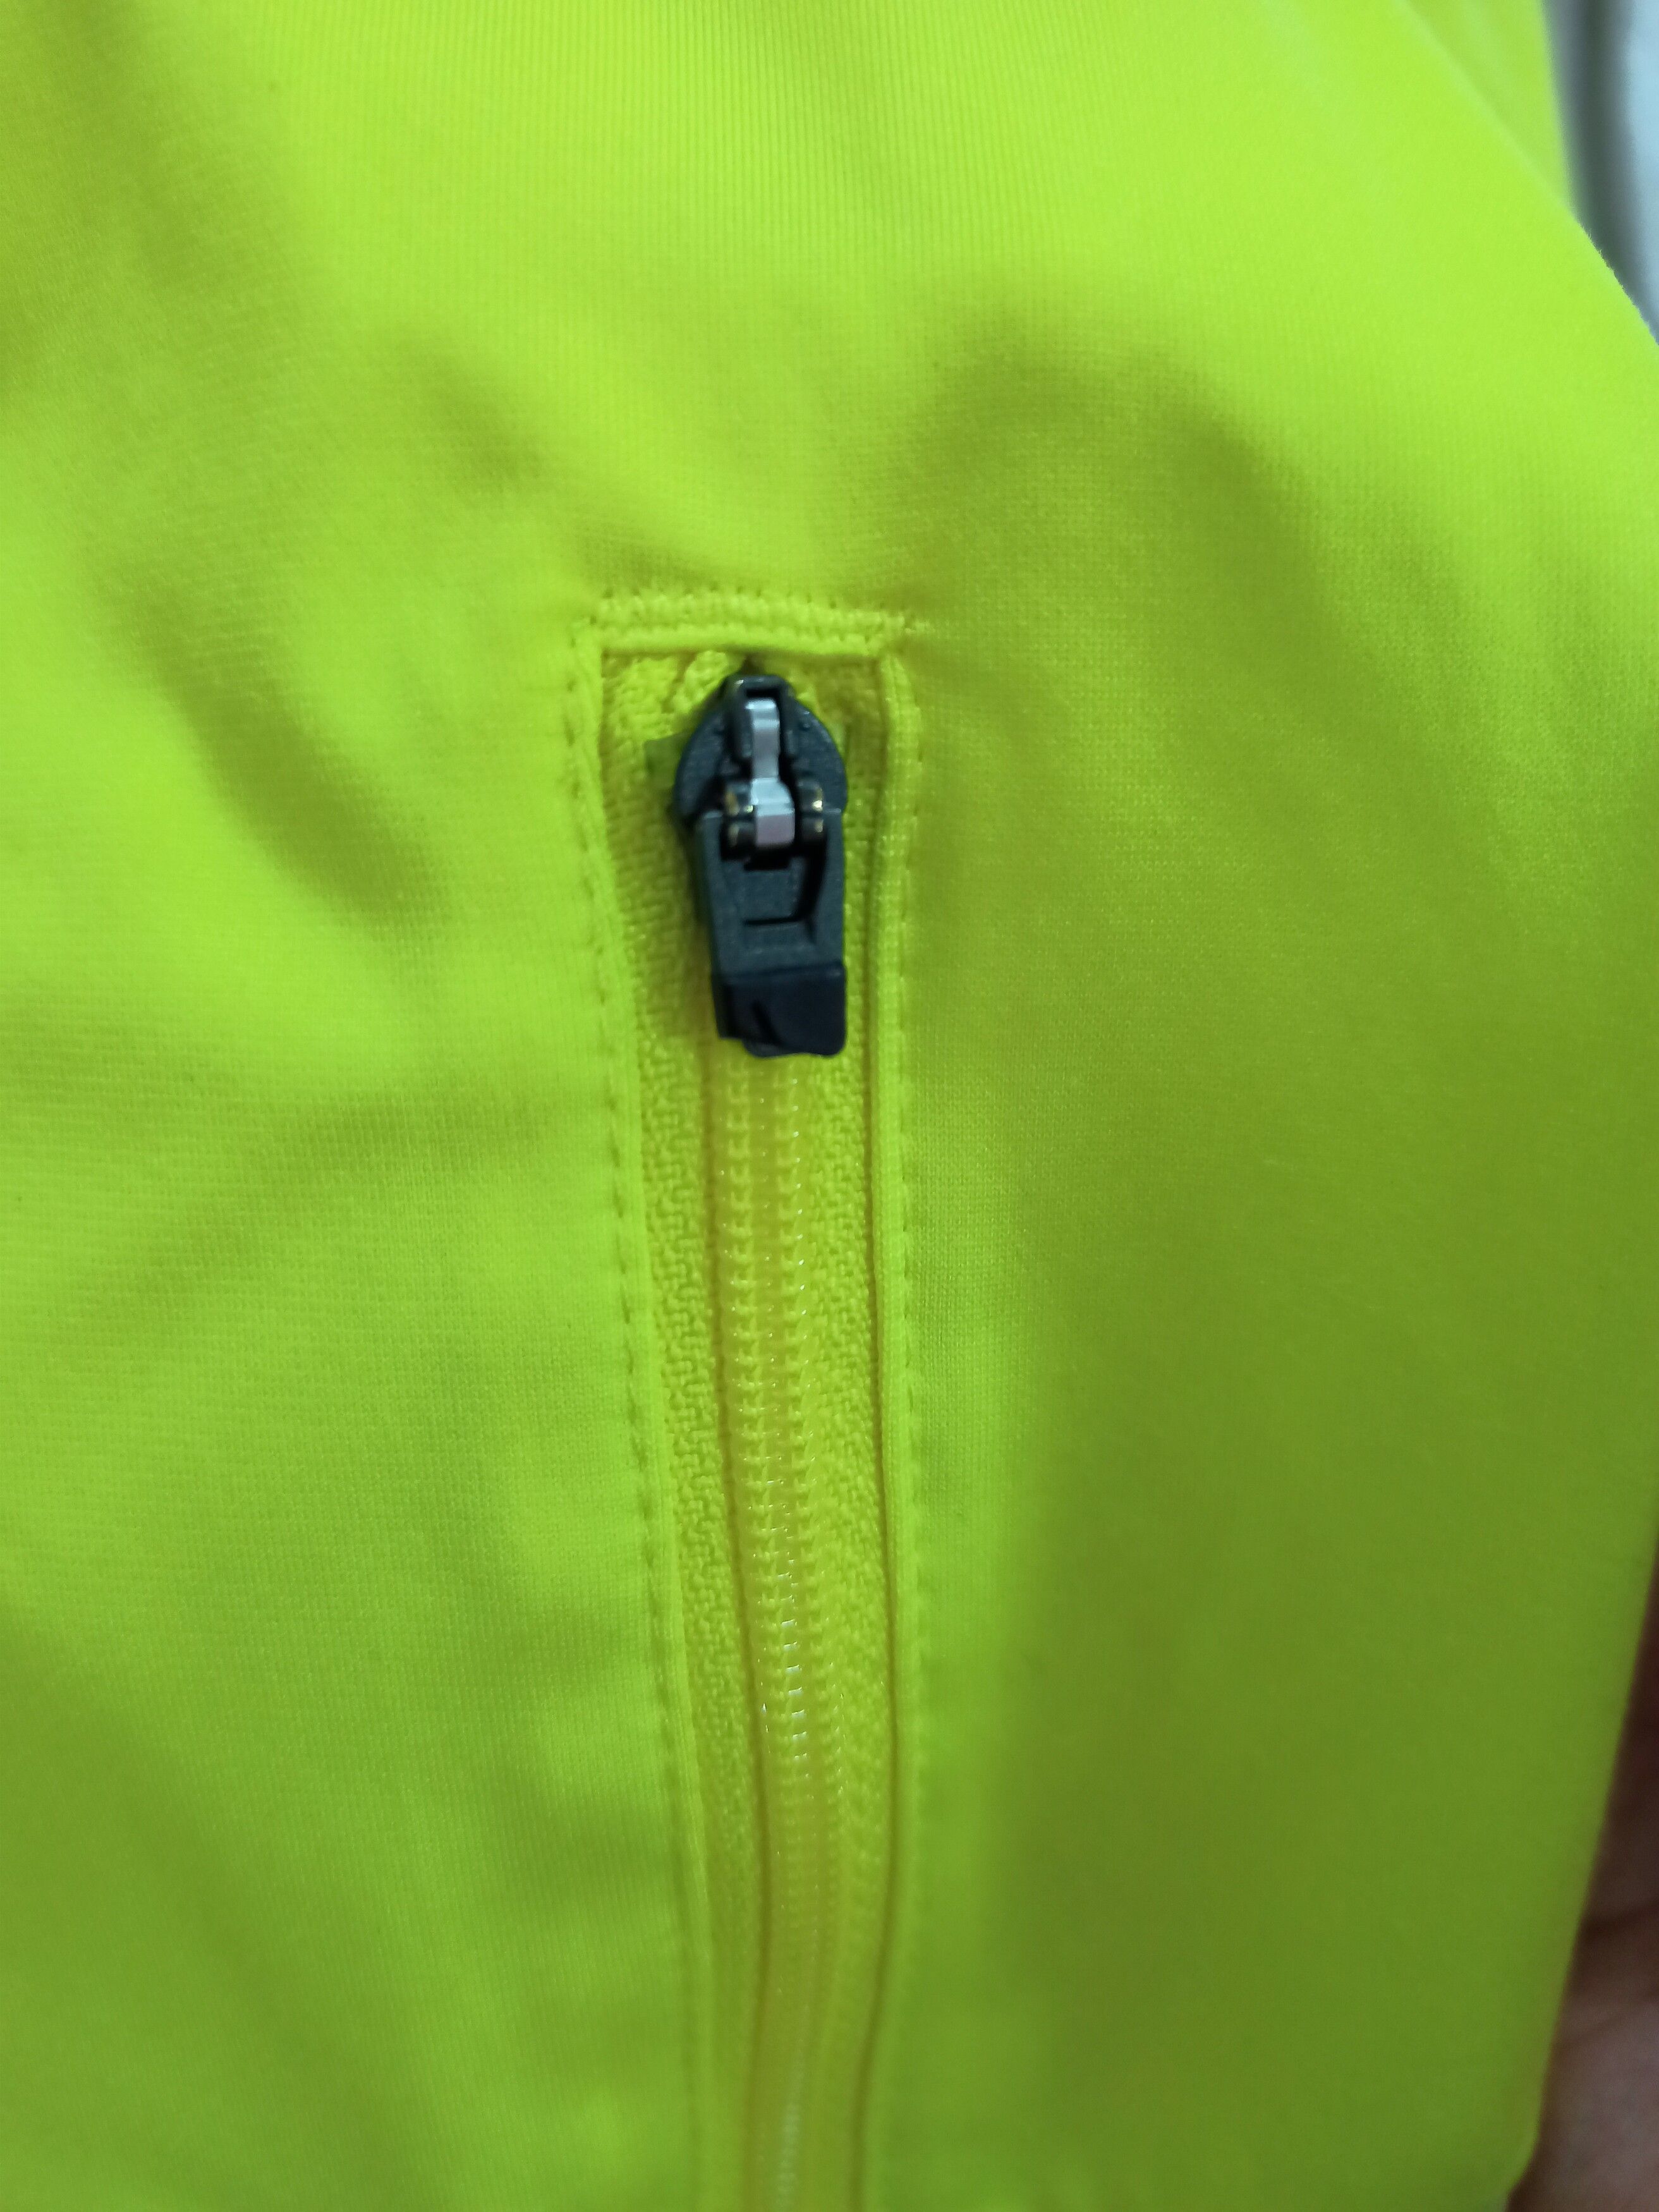 Nike Dri-fit Small Swoosh Embroidery Yellow Neon Jacket - 5